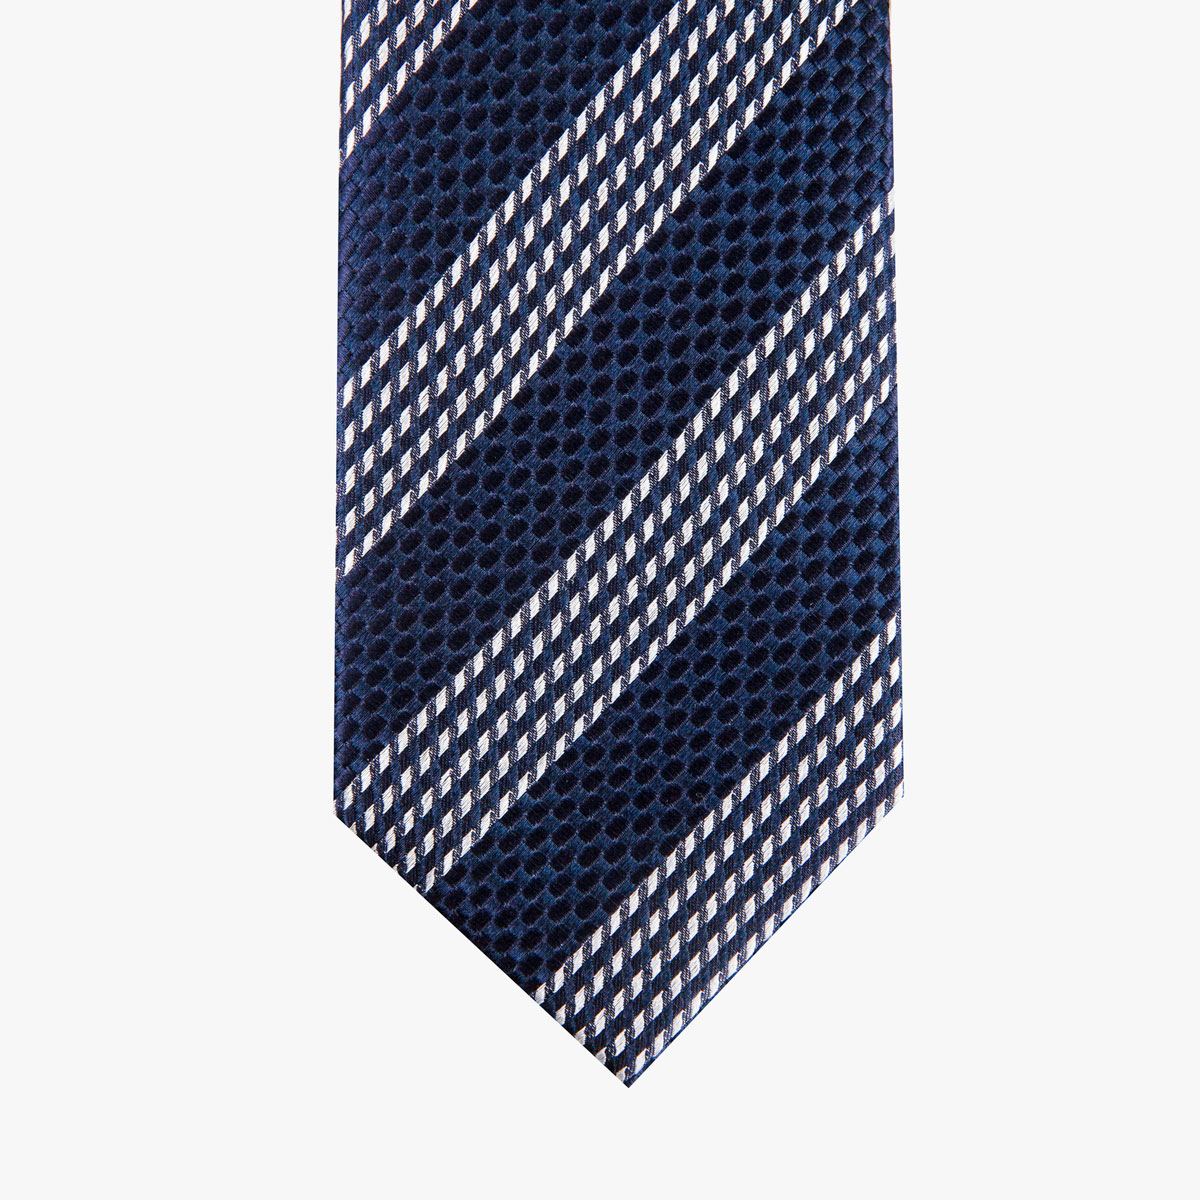 Krawatte glatt gestreift in blau weiß